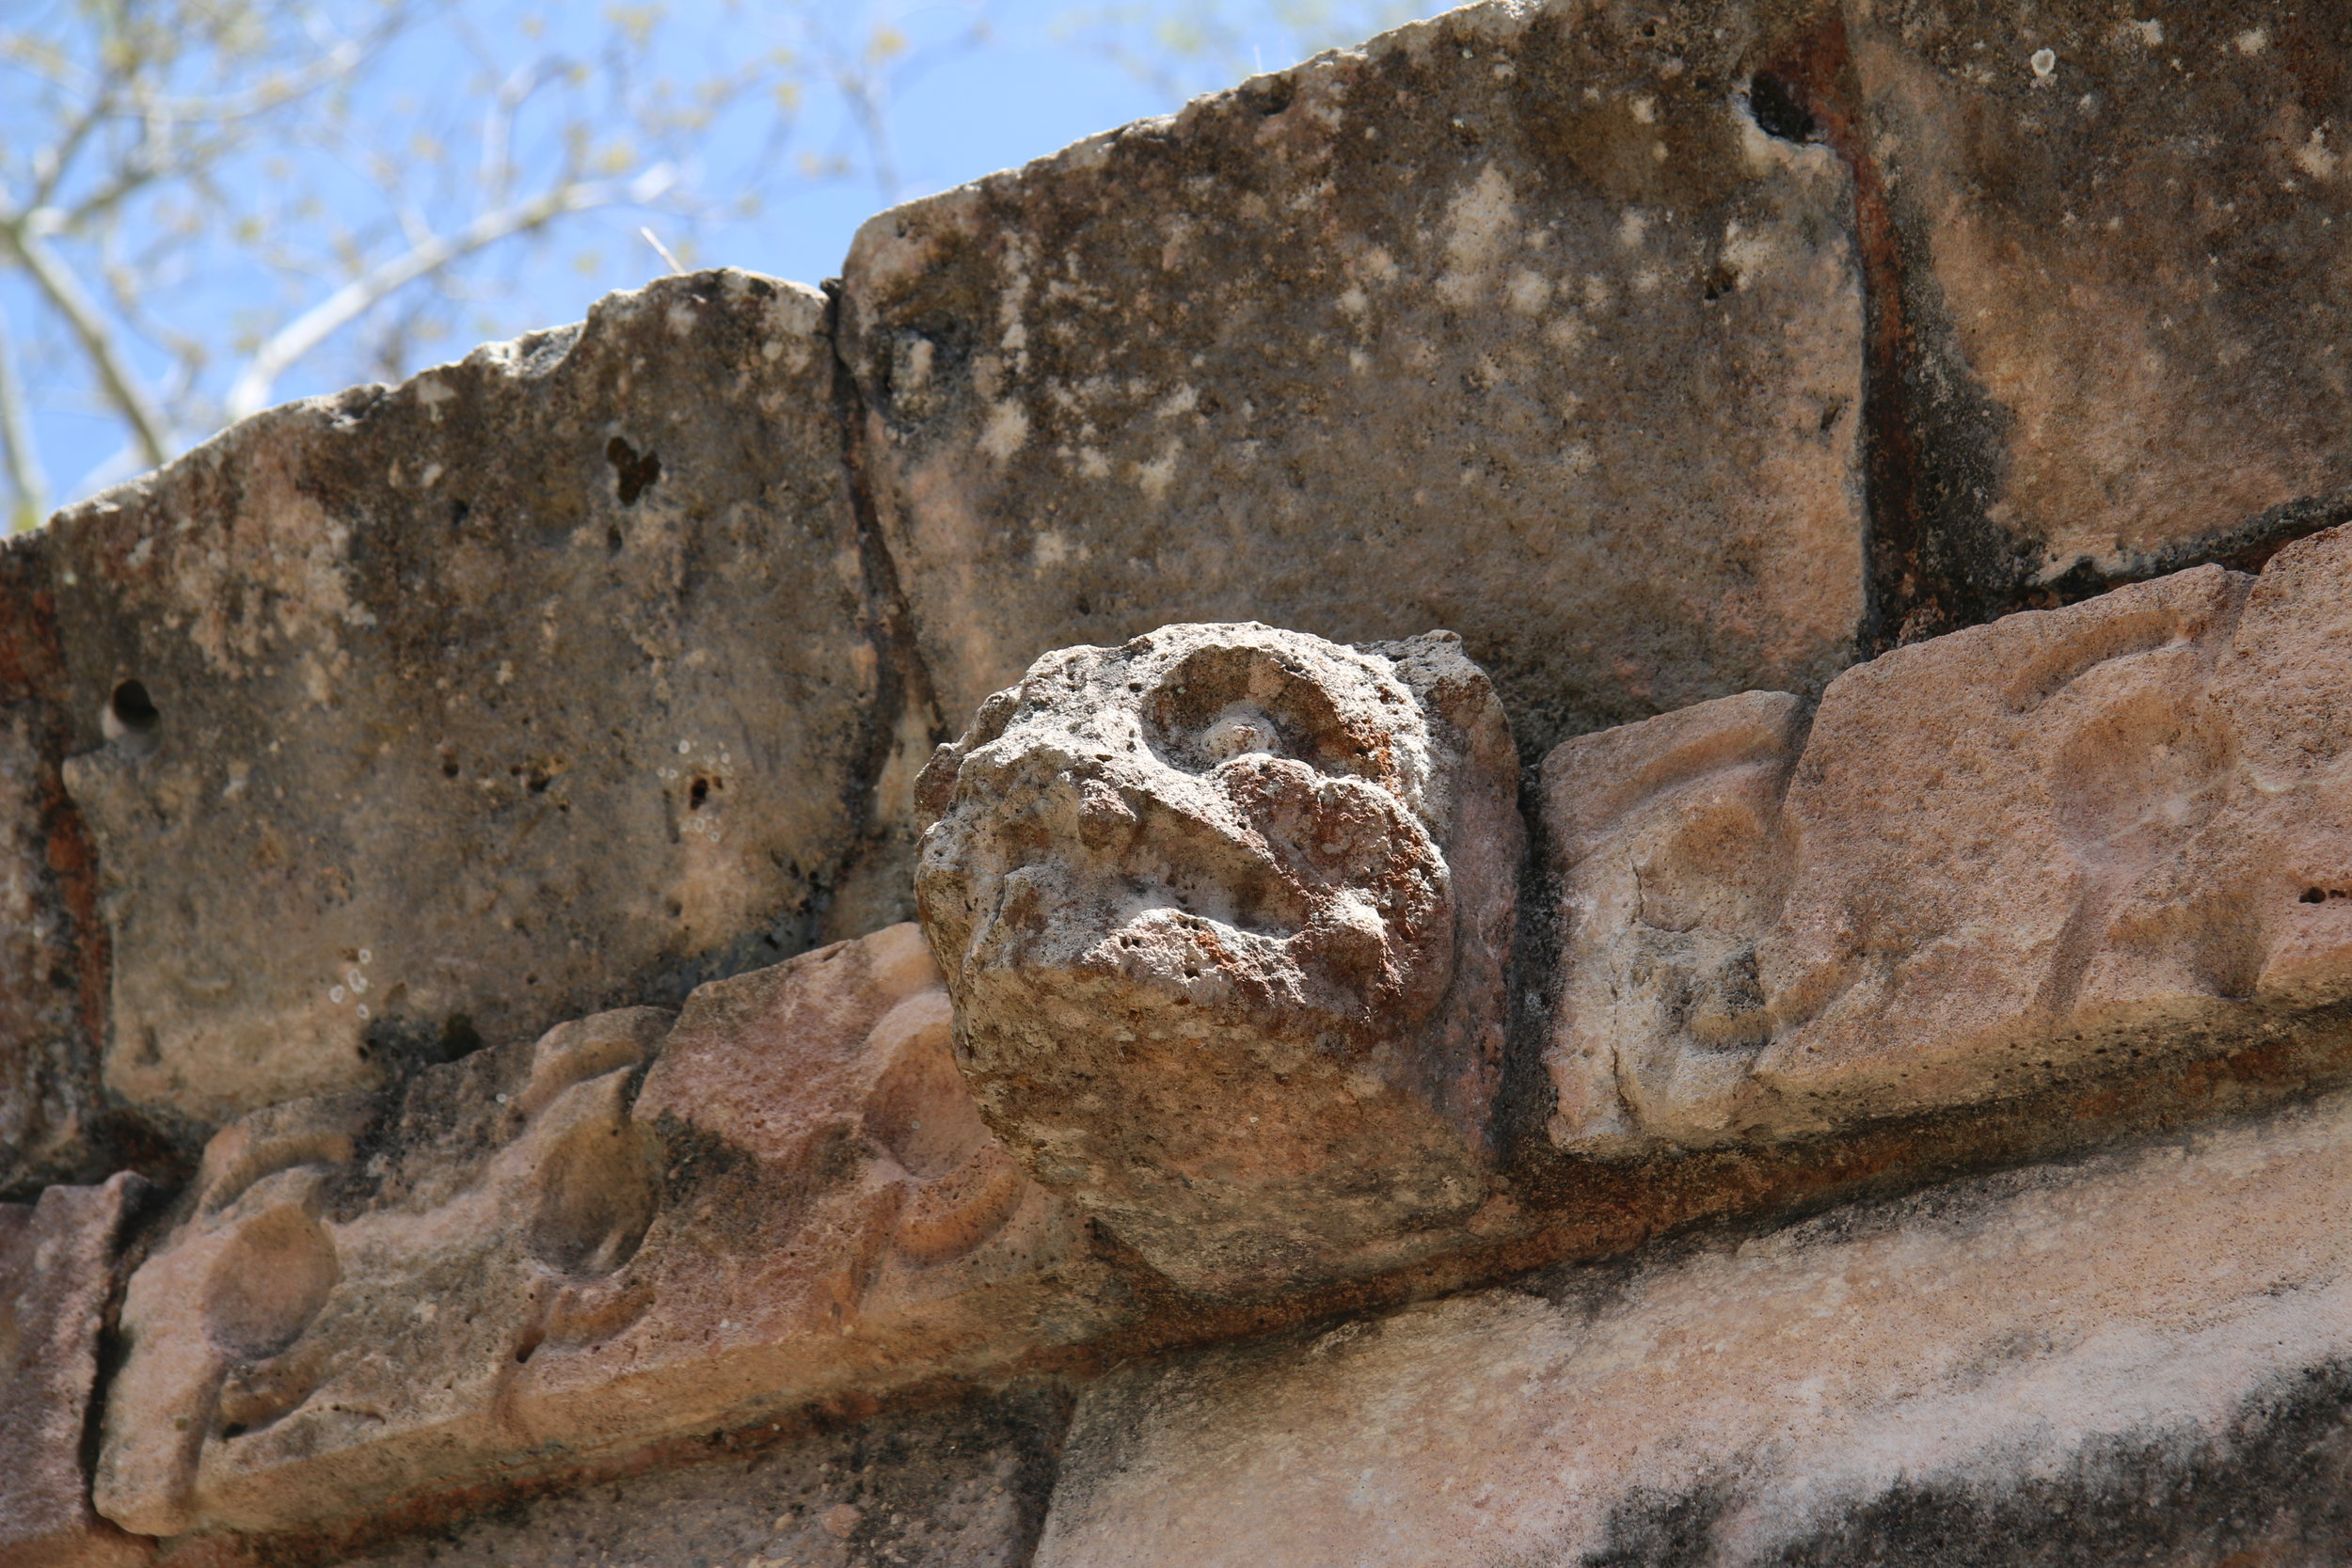  A jaguar head in stone 